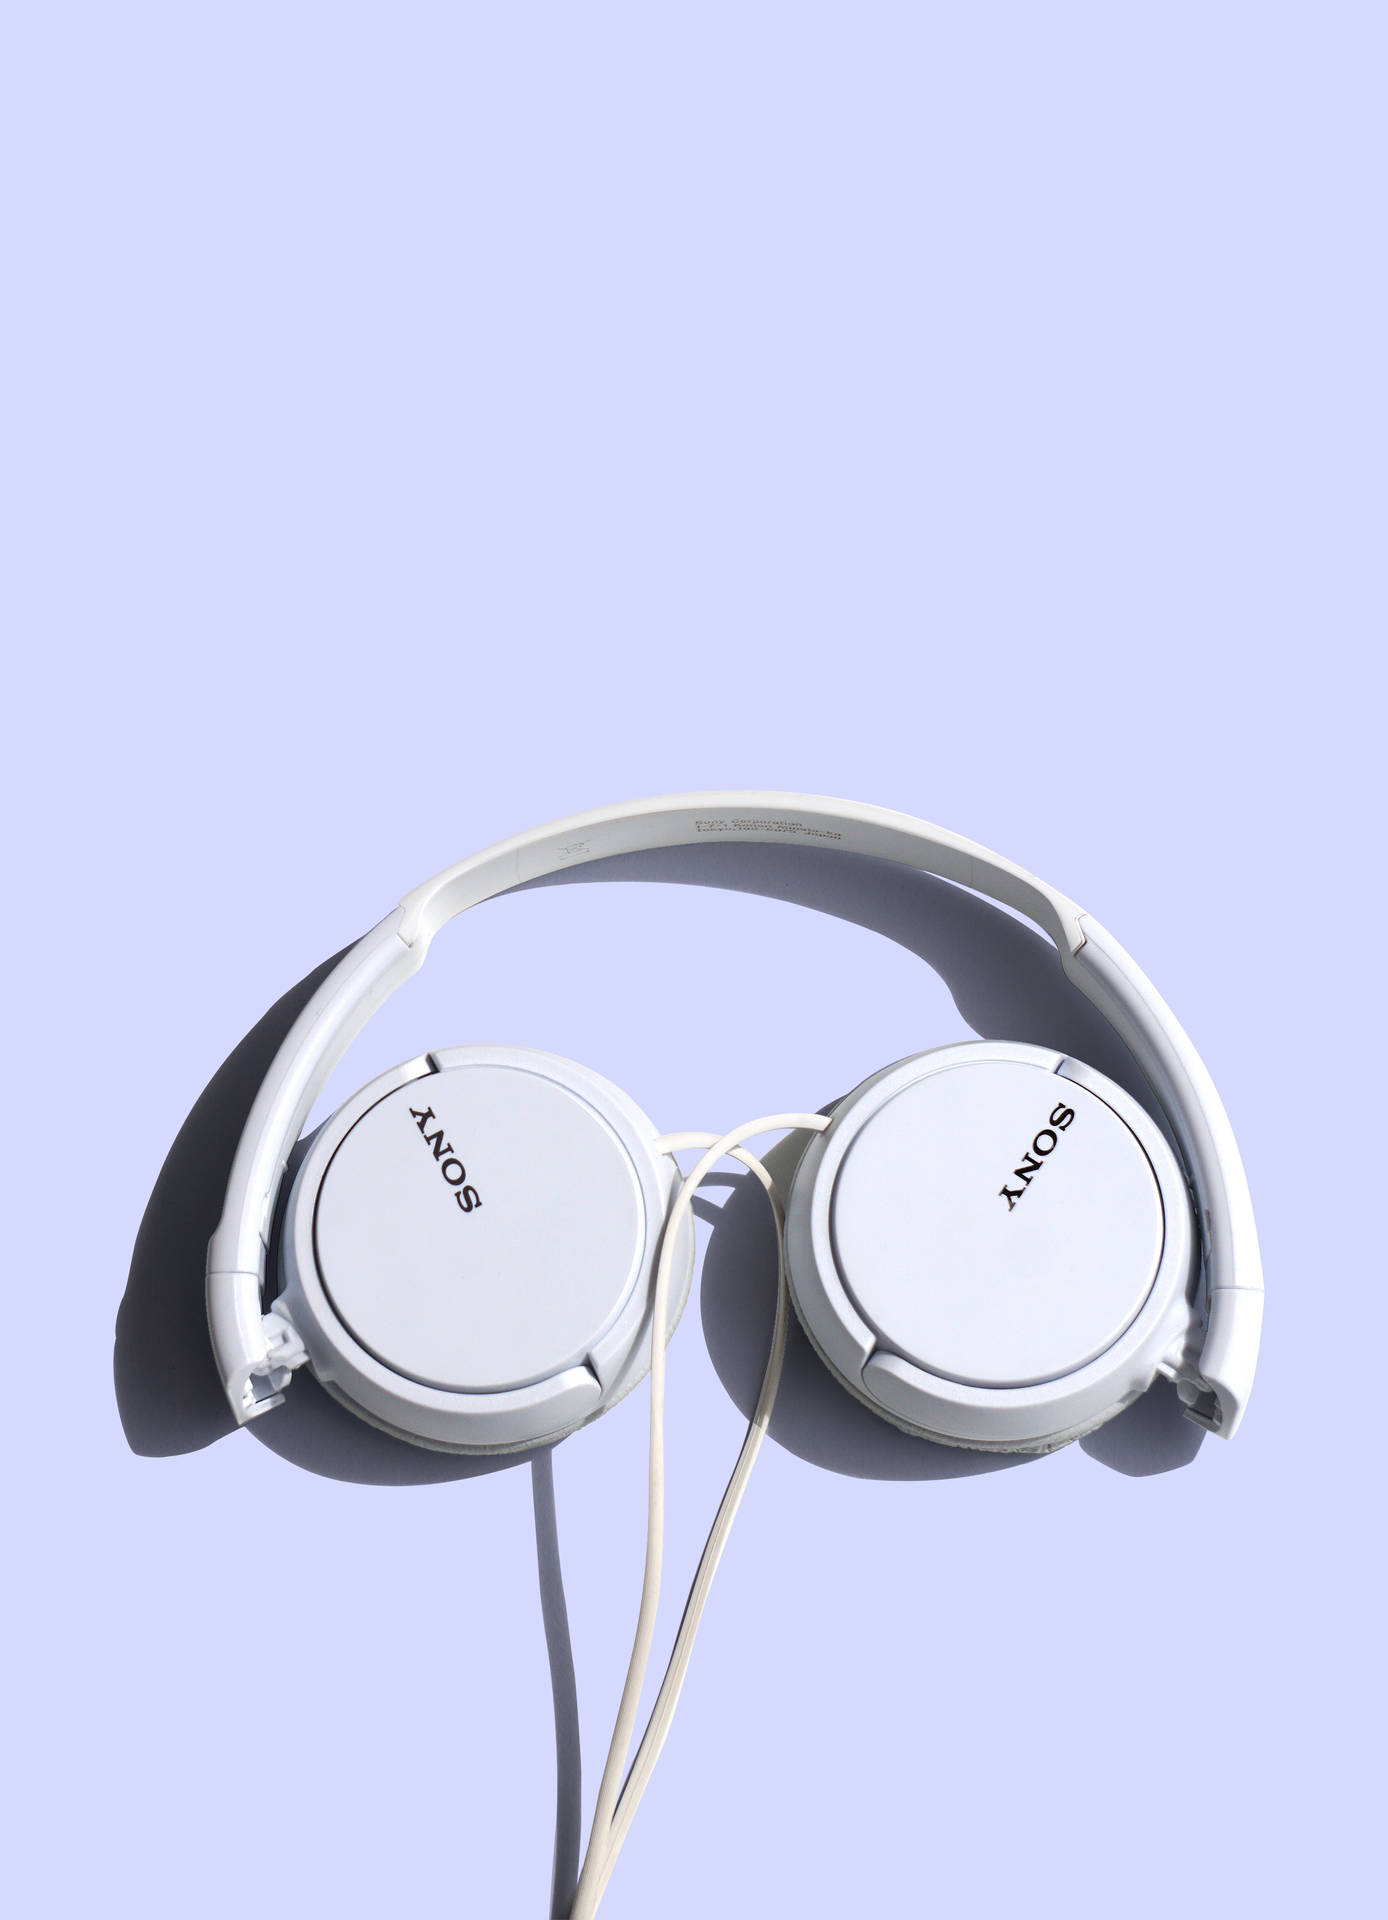 Sony White Headphones Wallpaper